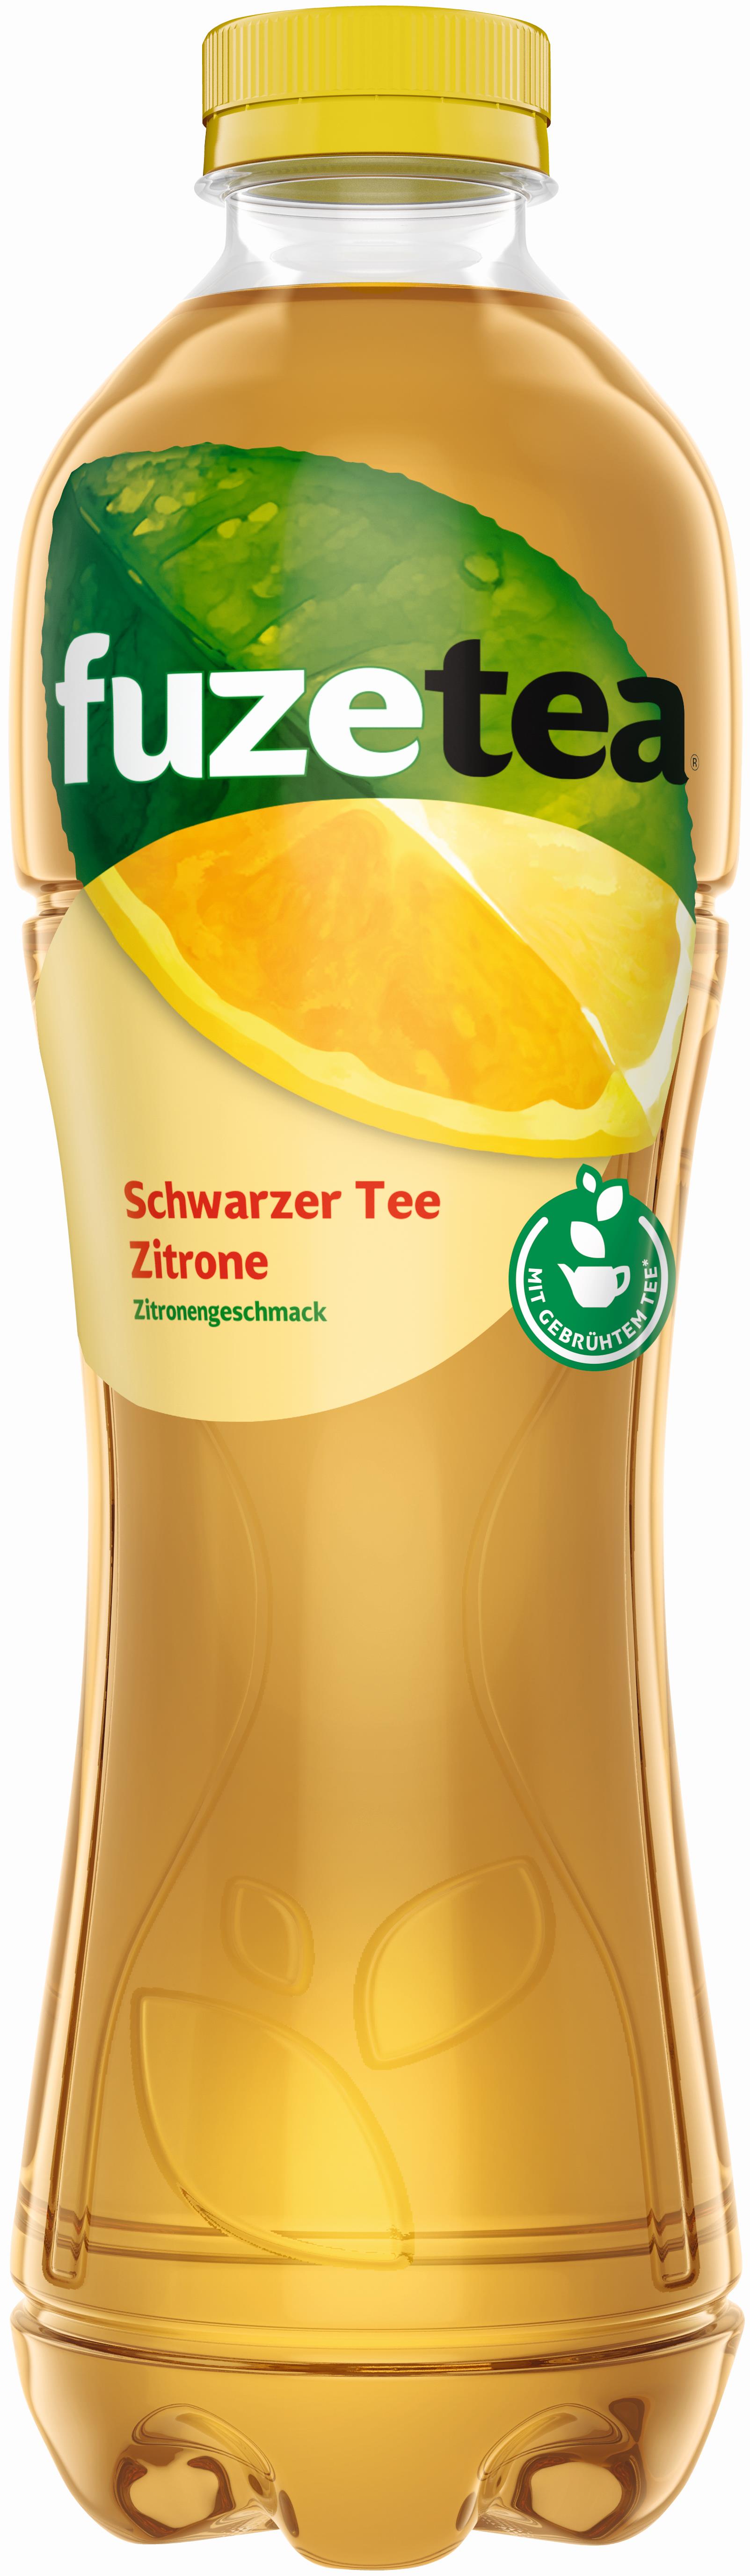 Fuze Tea Schwarzer Tee Zitrone